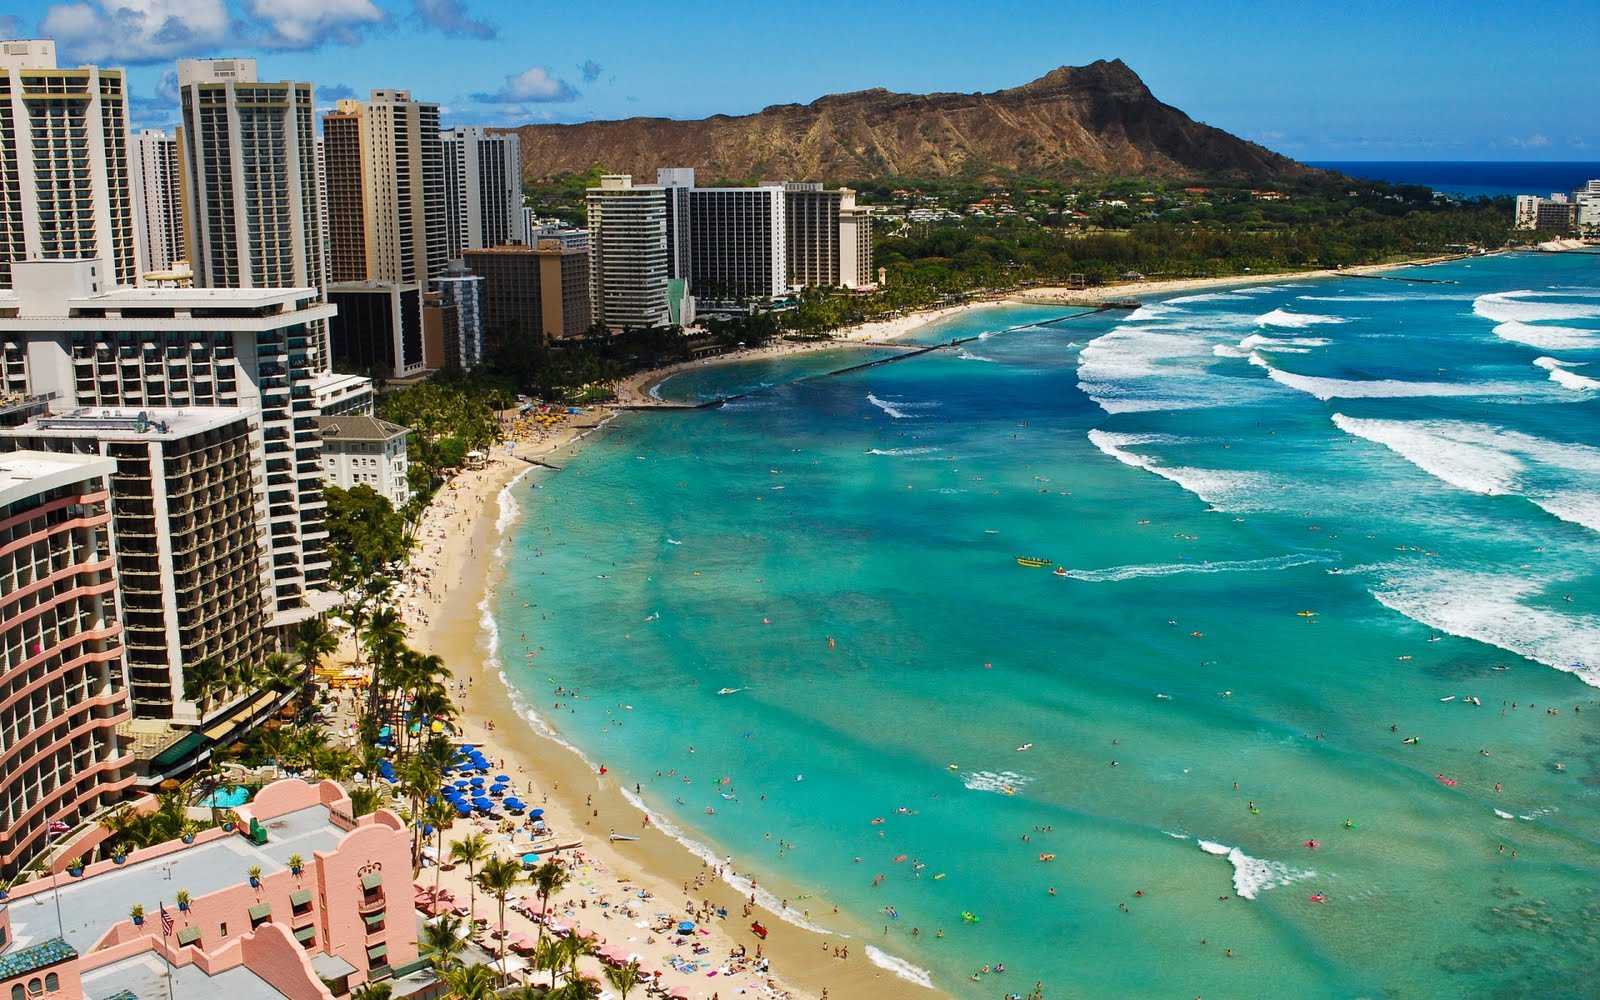 Download this Waikiki Beach Hawaii picture